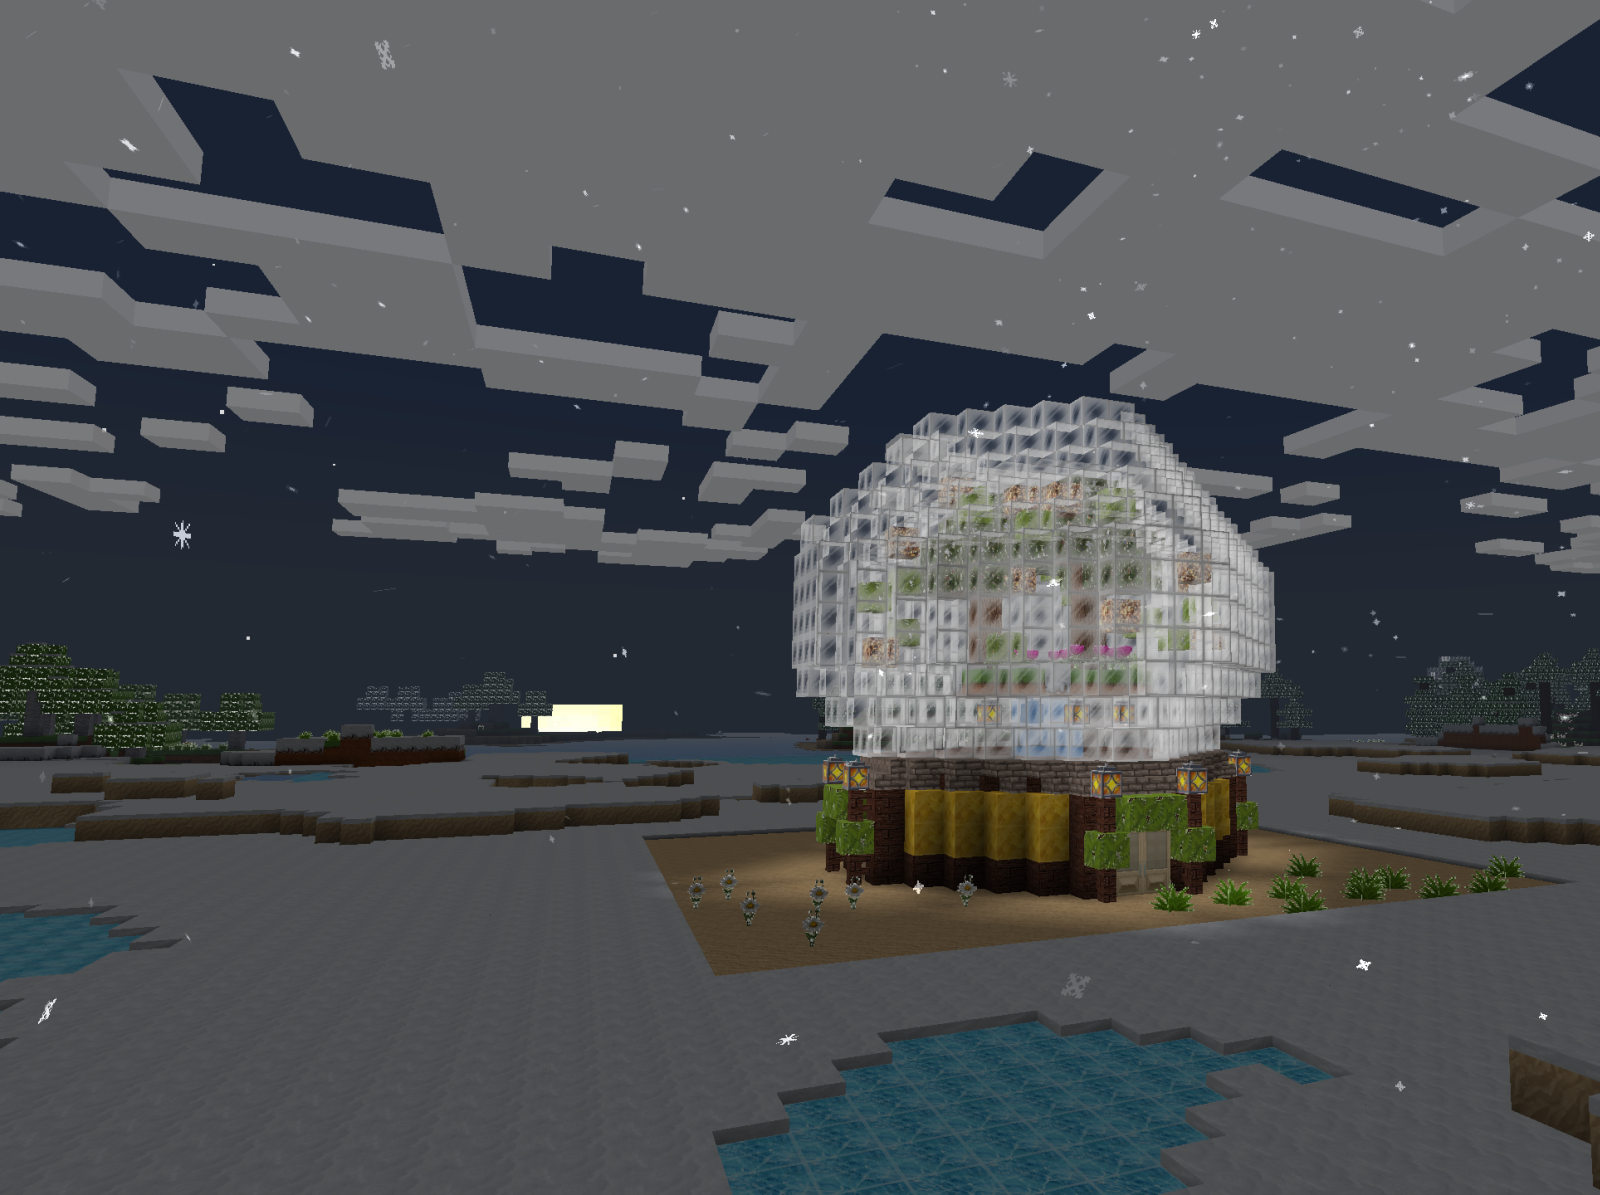 ⛏️ Minecraft Build Tutorial :: 🌎 Earth Globe House 🏠 